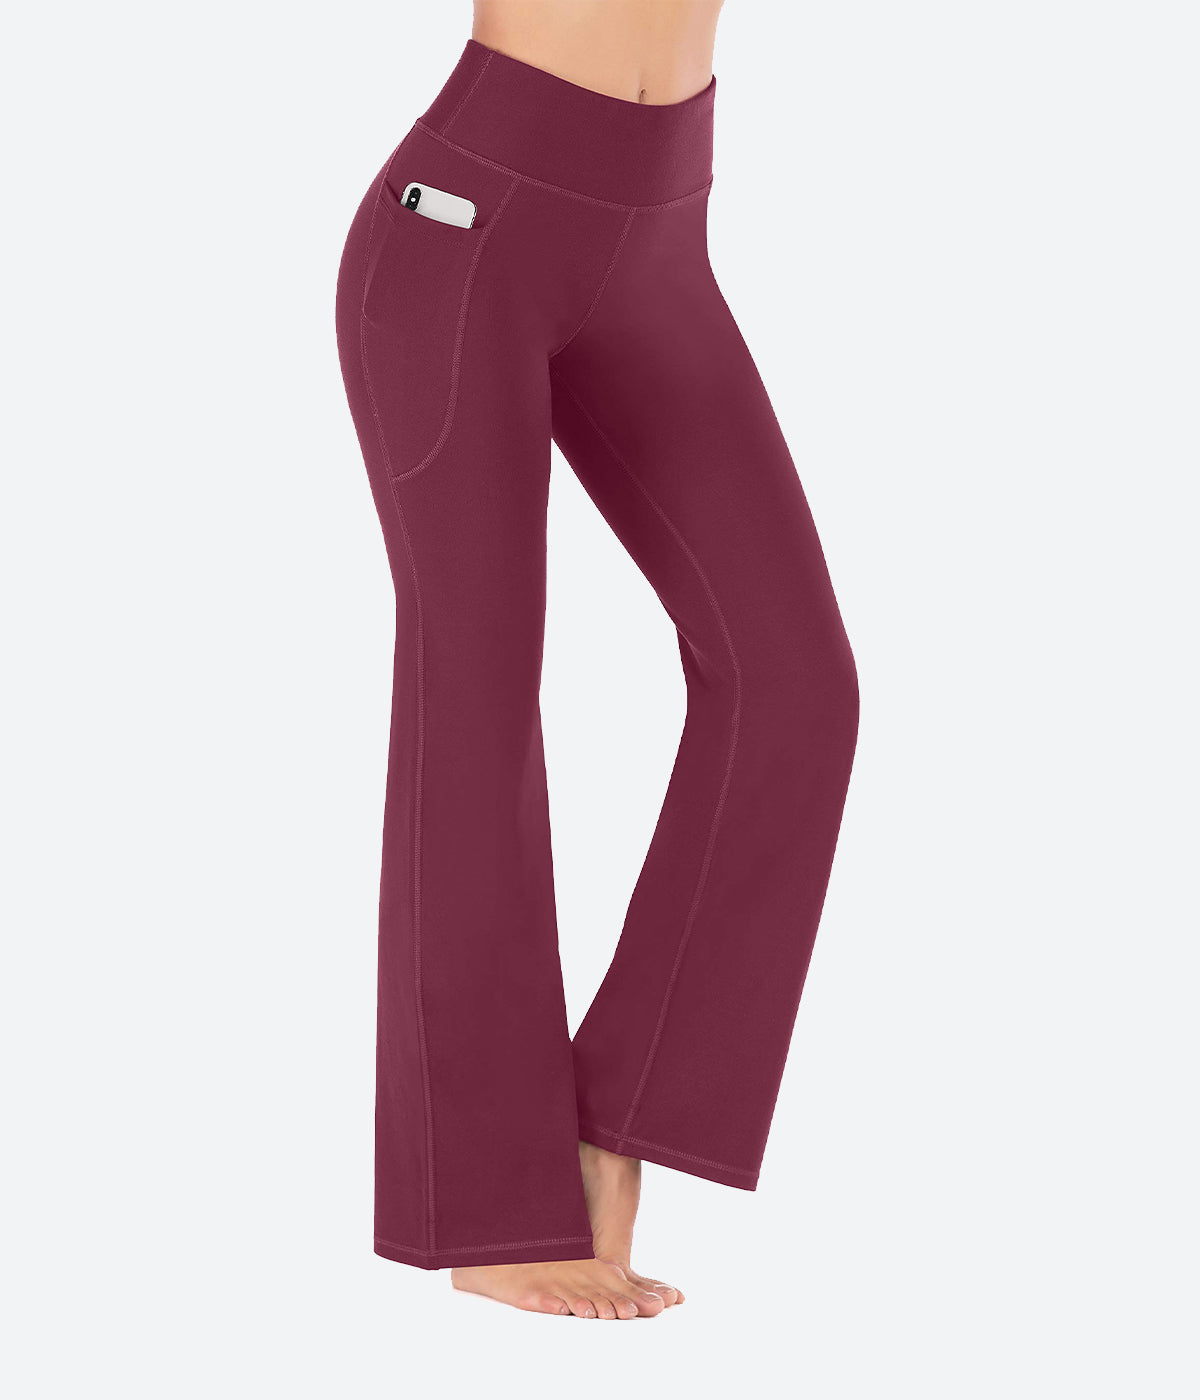 bootcut yoga pants with folded uggs